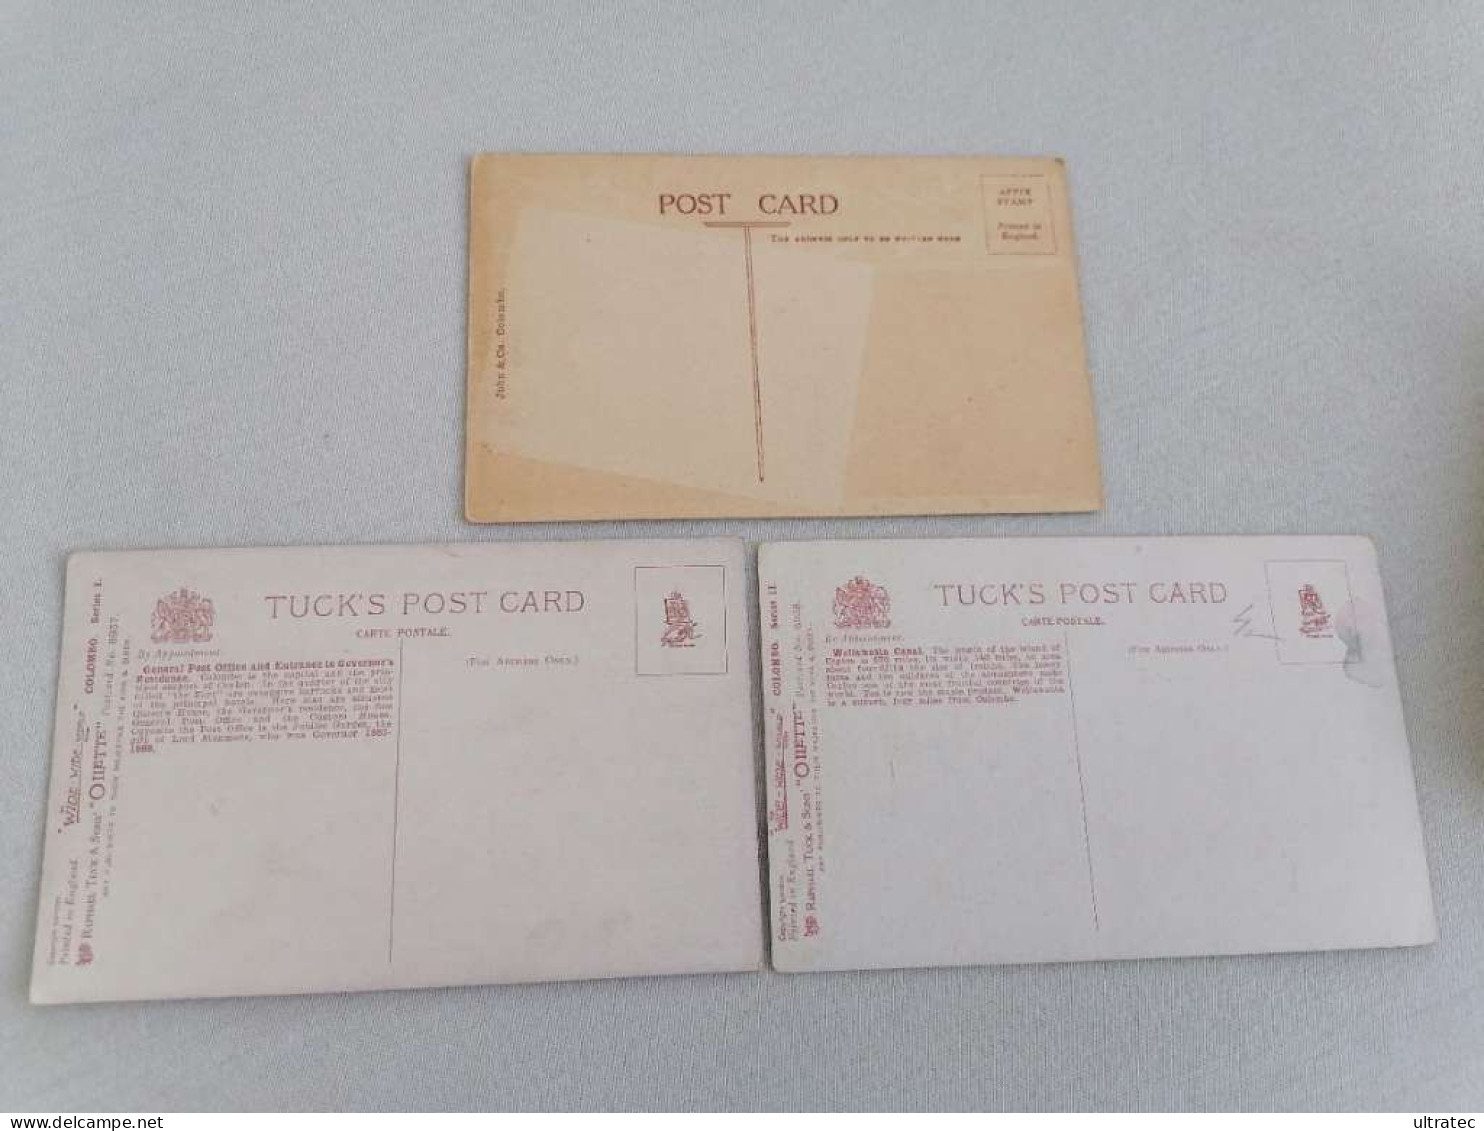 3x AK CEYLON / SRI LANKA, COLOMBO,  Postcards Postkarte  Ca. 1910 Farbe   3 Postcards   Good Condition  1910er - Sri Lanka (Ceilán)